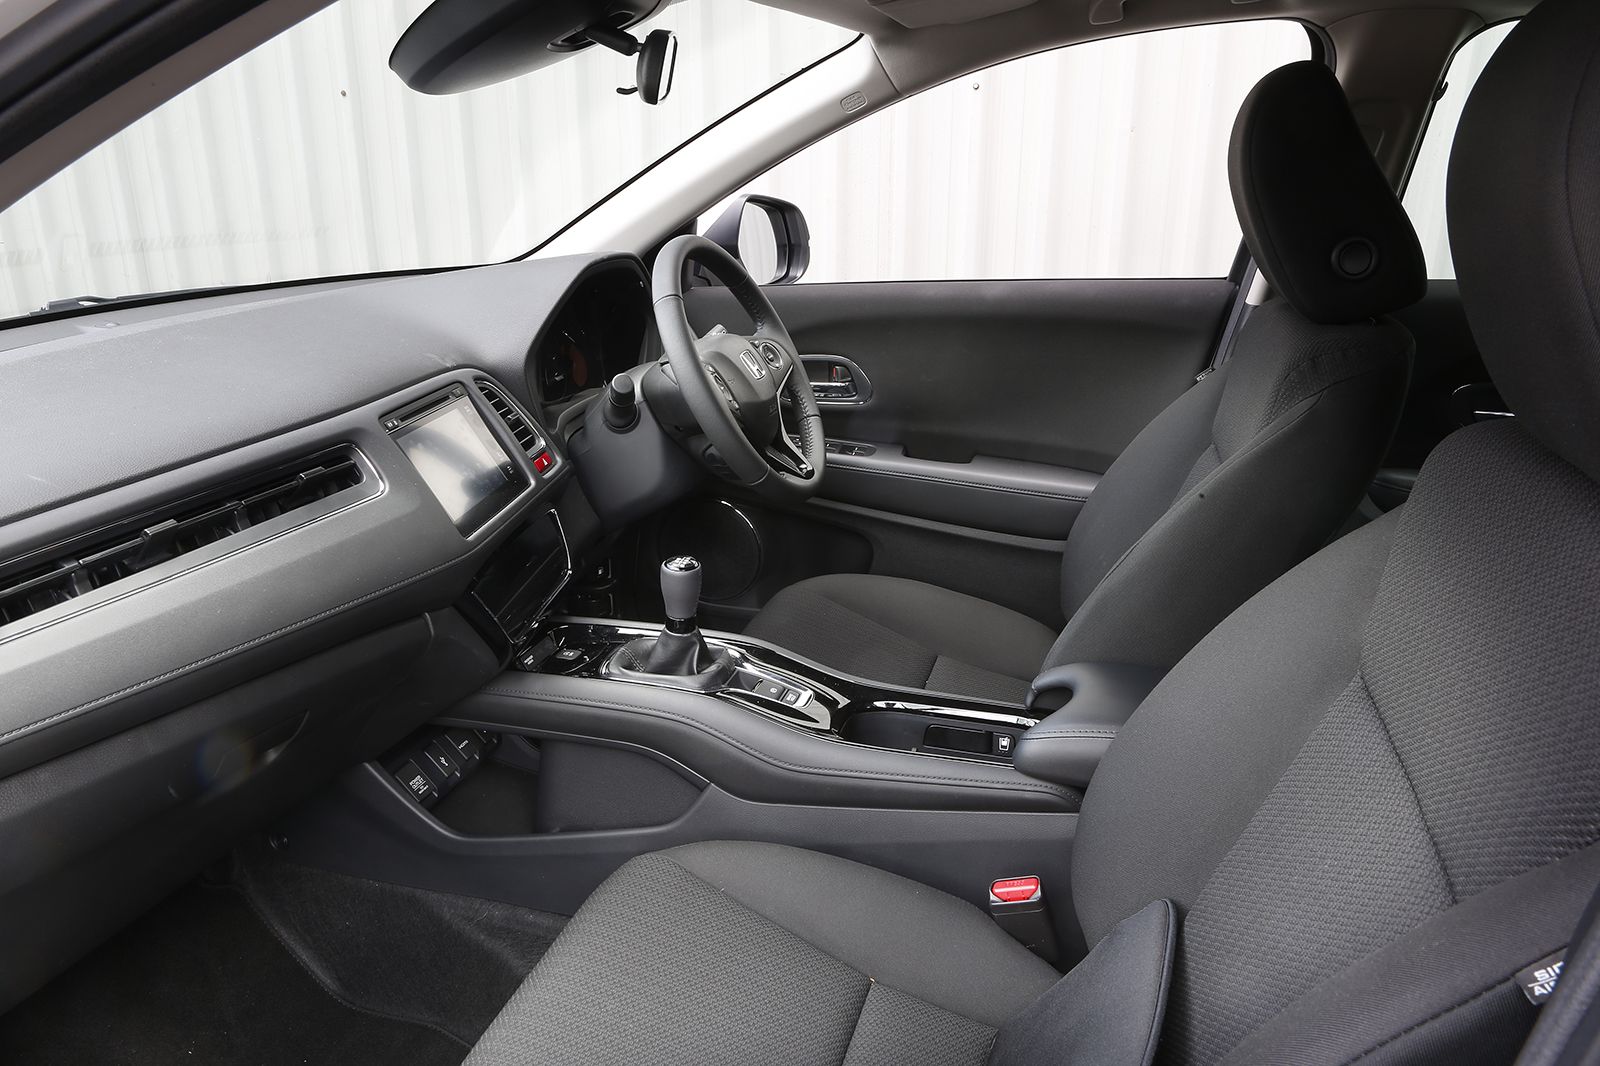 An inside look at the Honda HR-V